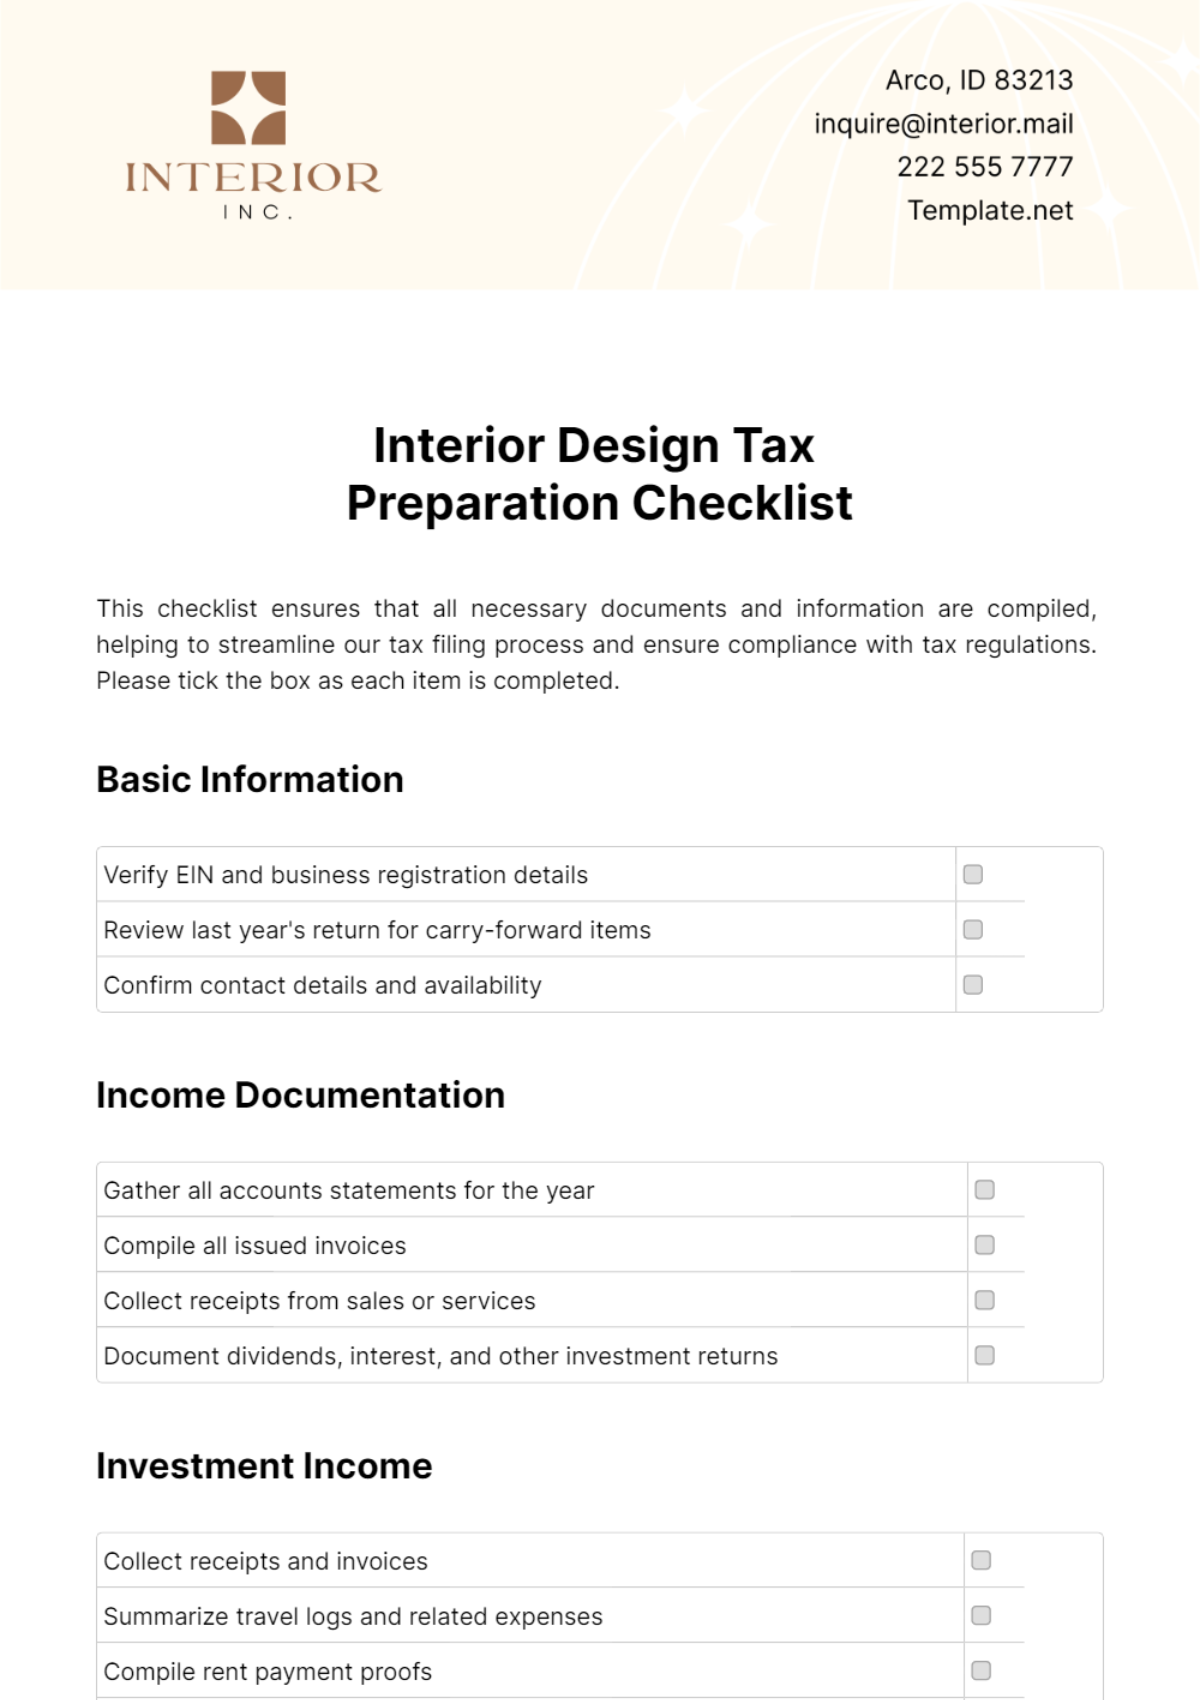 Free Interior Design Tax Preparation Checklist Template